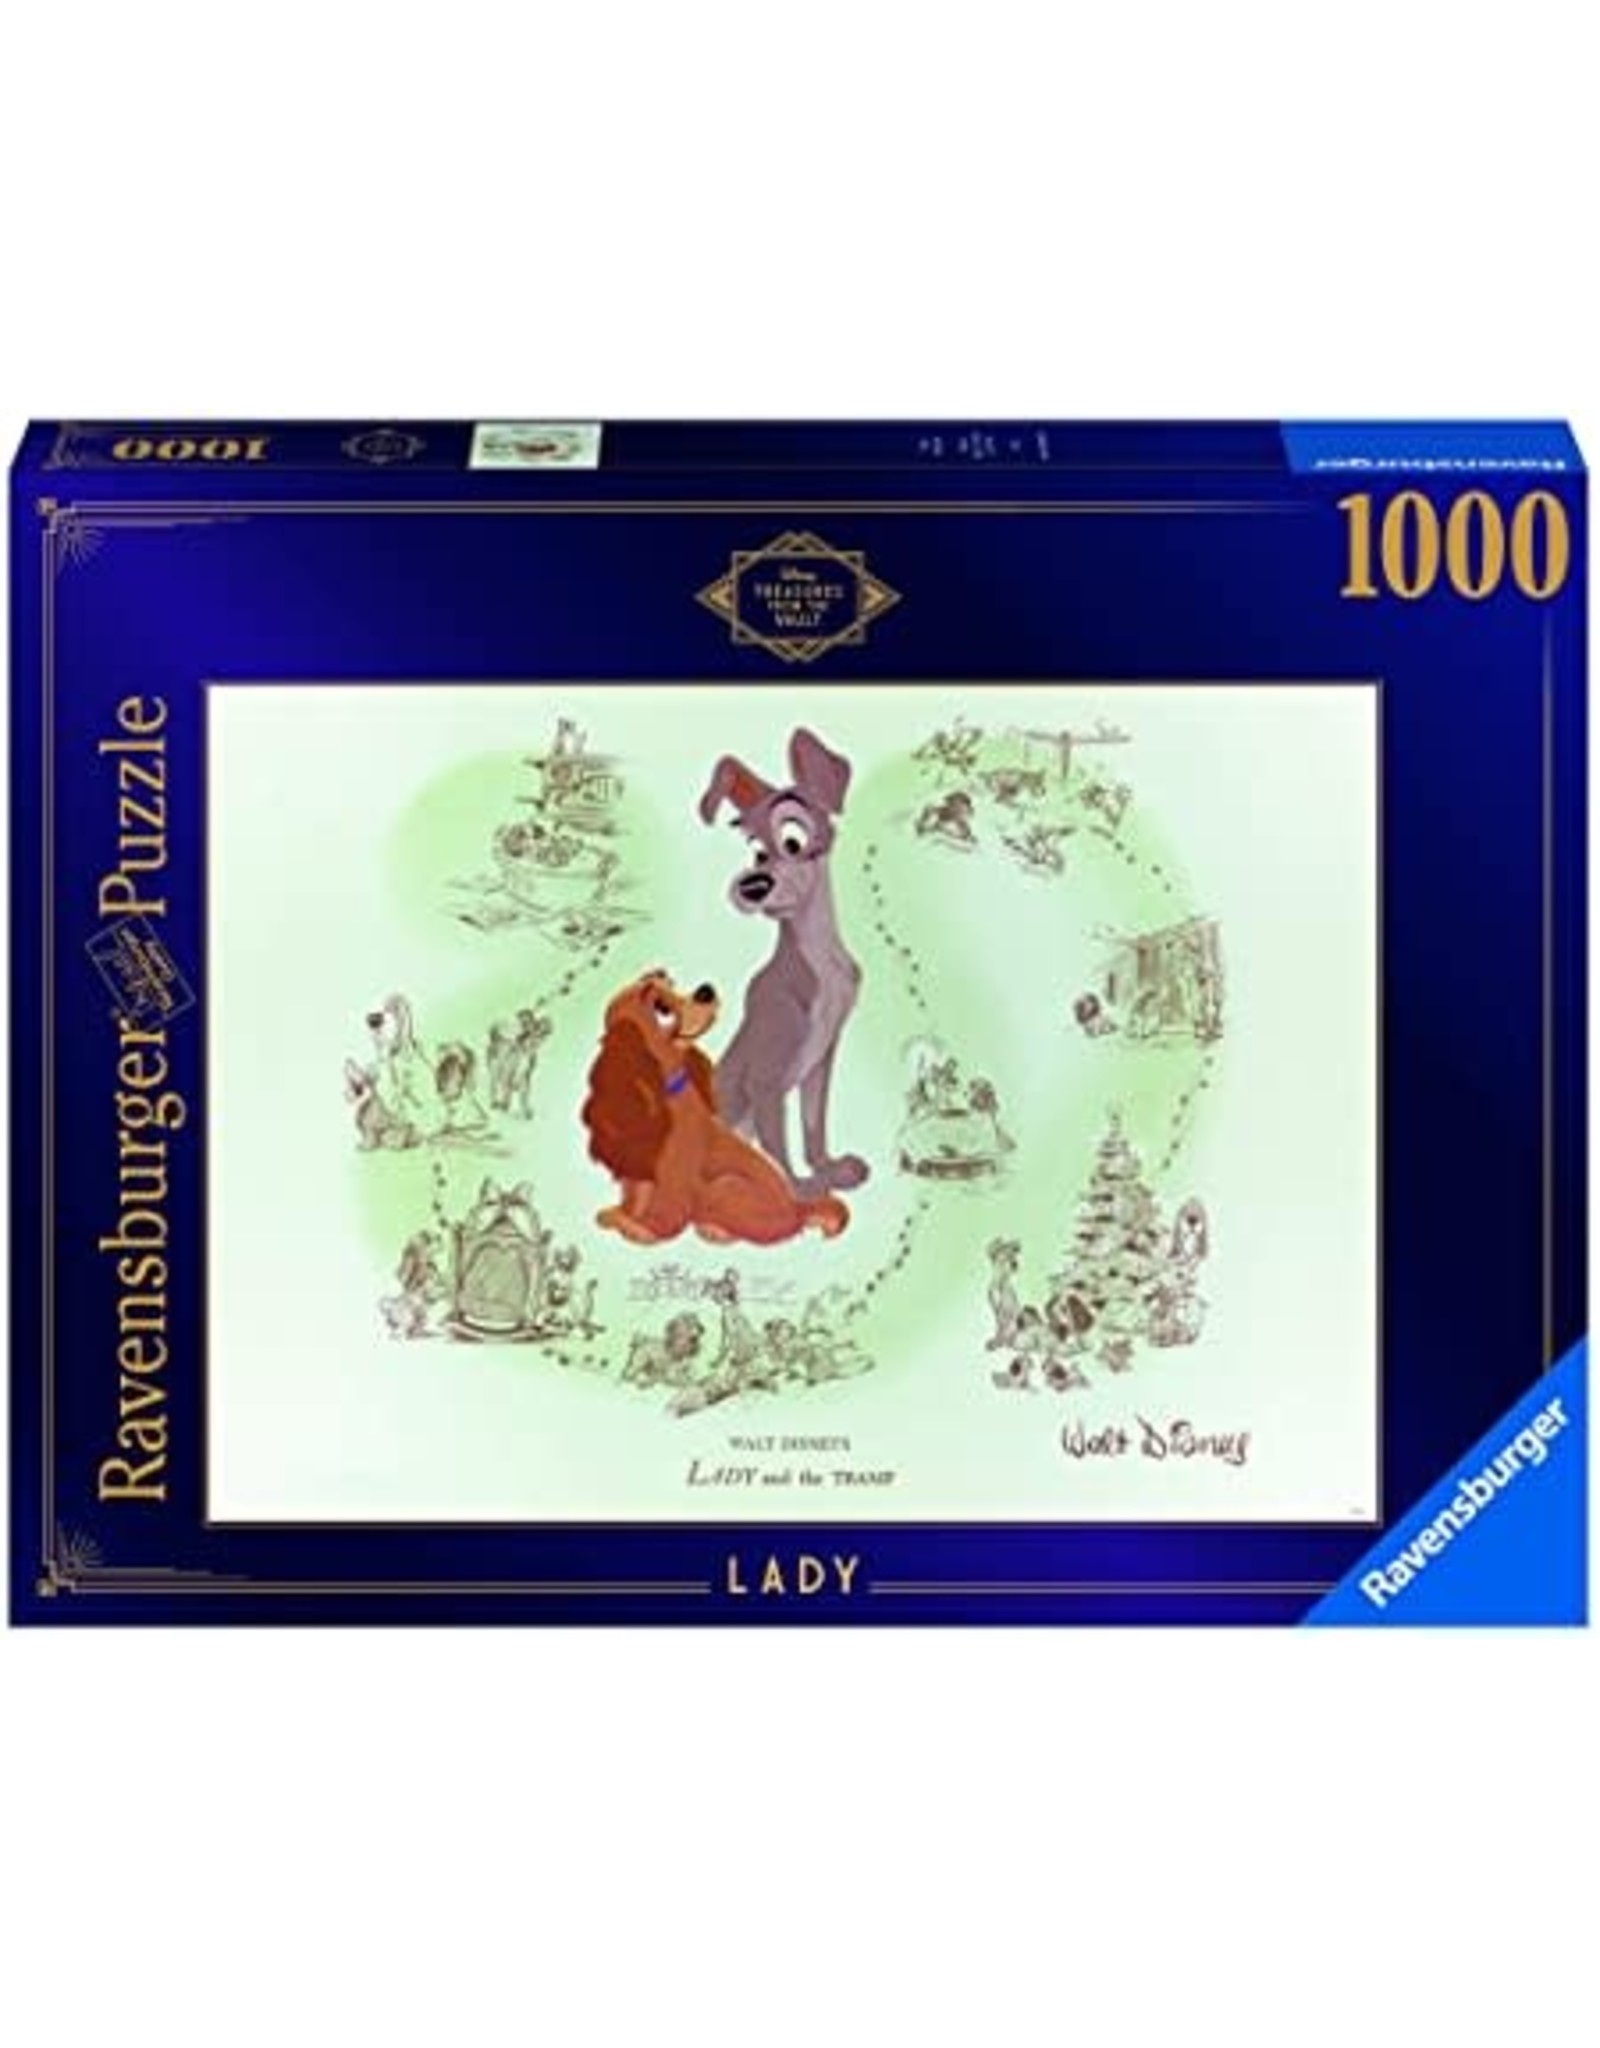 Ravensburger 1000 pcs. Disney Vault Lady Puzzle